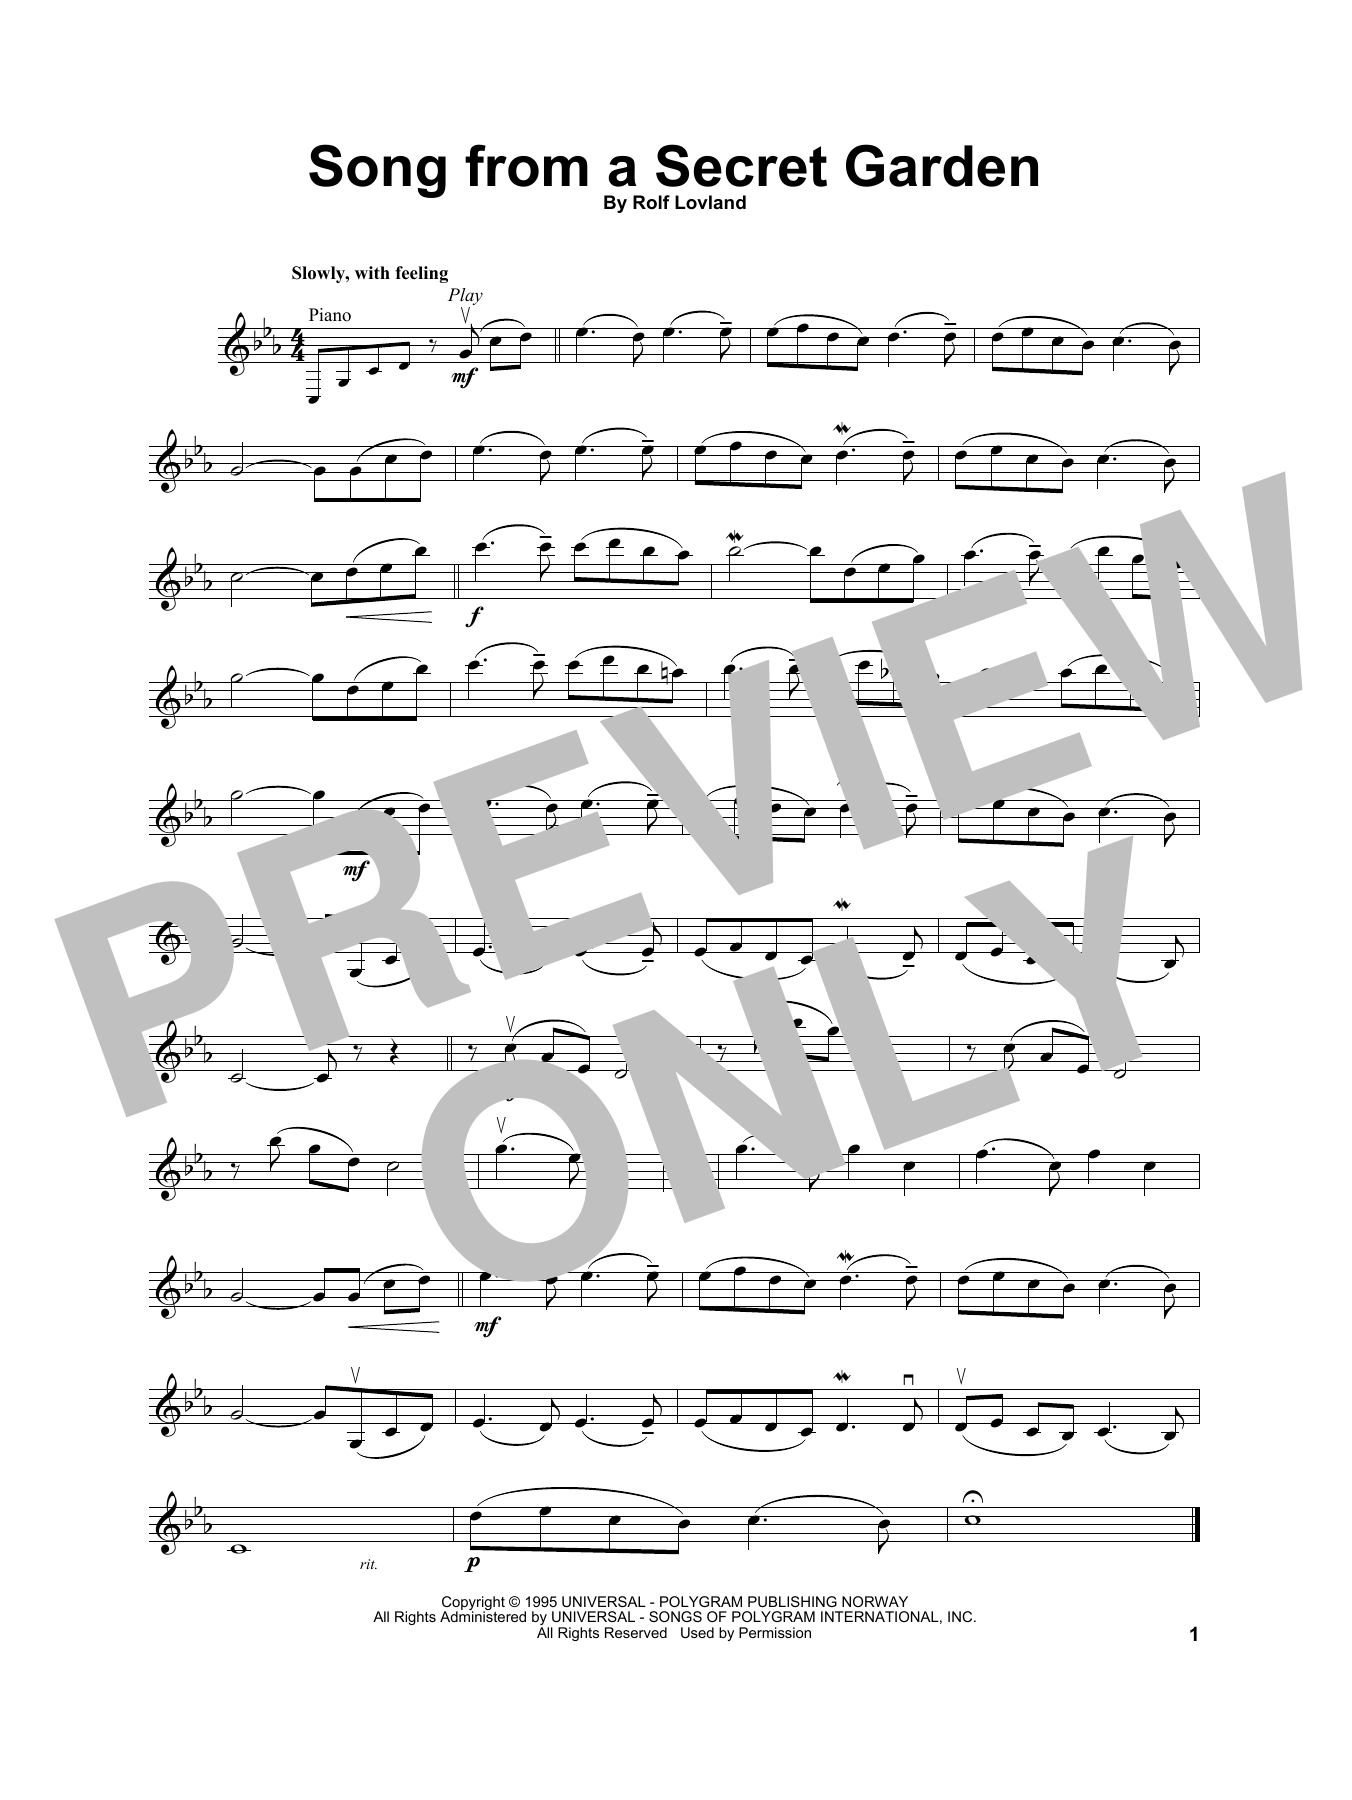 Secret Garden Song From A Secret Garden Sheet Music Notes & Chords for Violin - Download or Print PDF